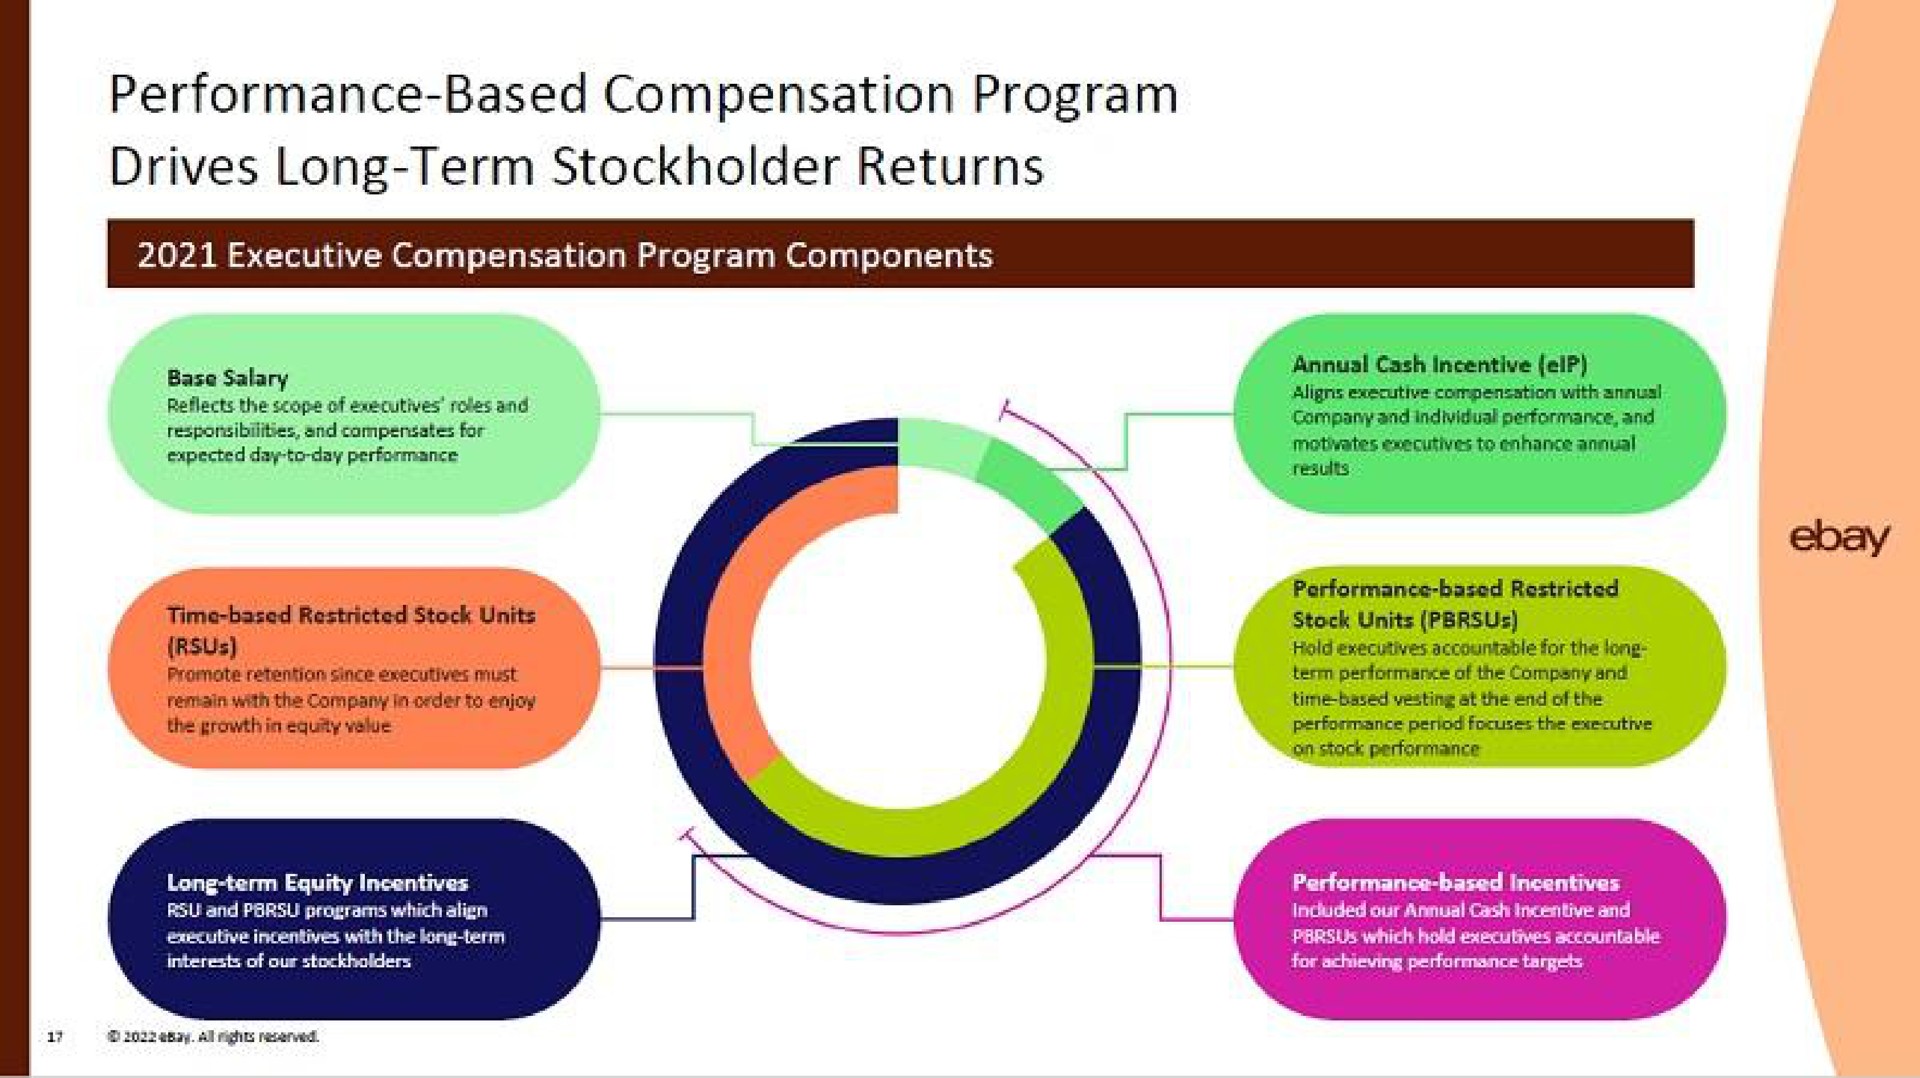 performance based compensation program drives long term stockholder returns time based restricted stock units promote retention since executives must | eBay